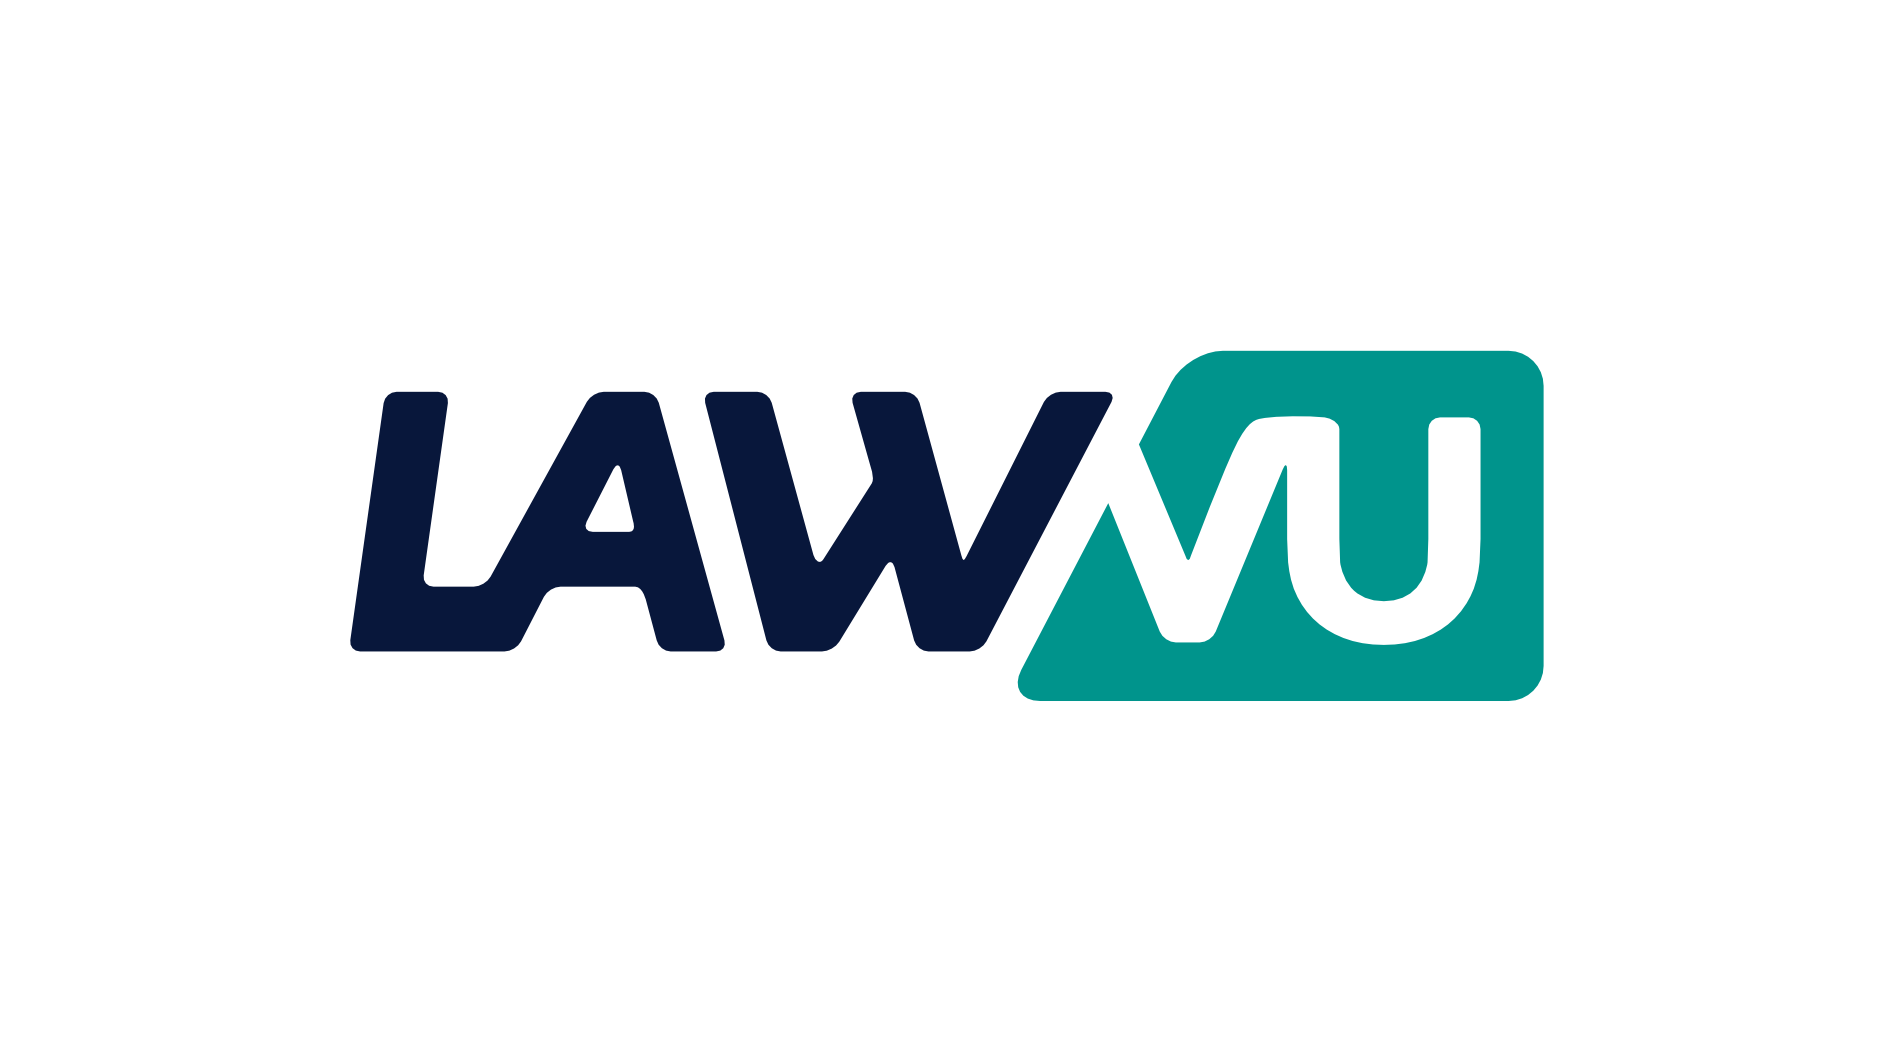 LawVu logo